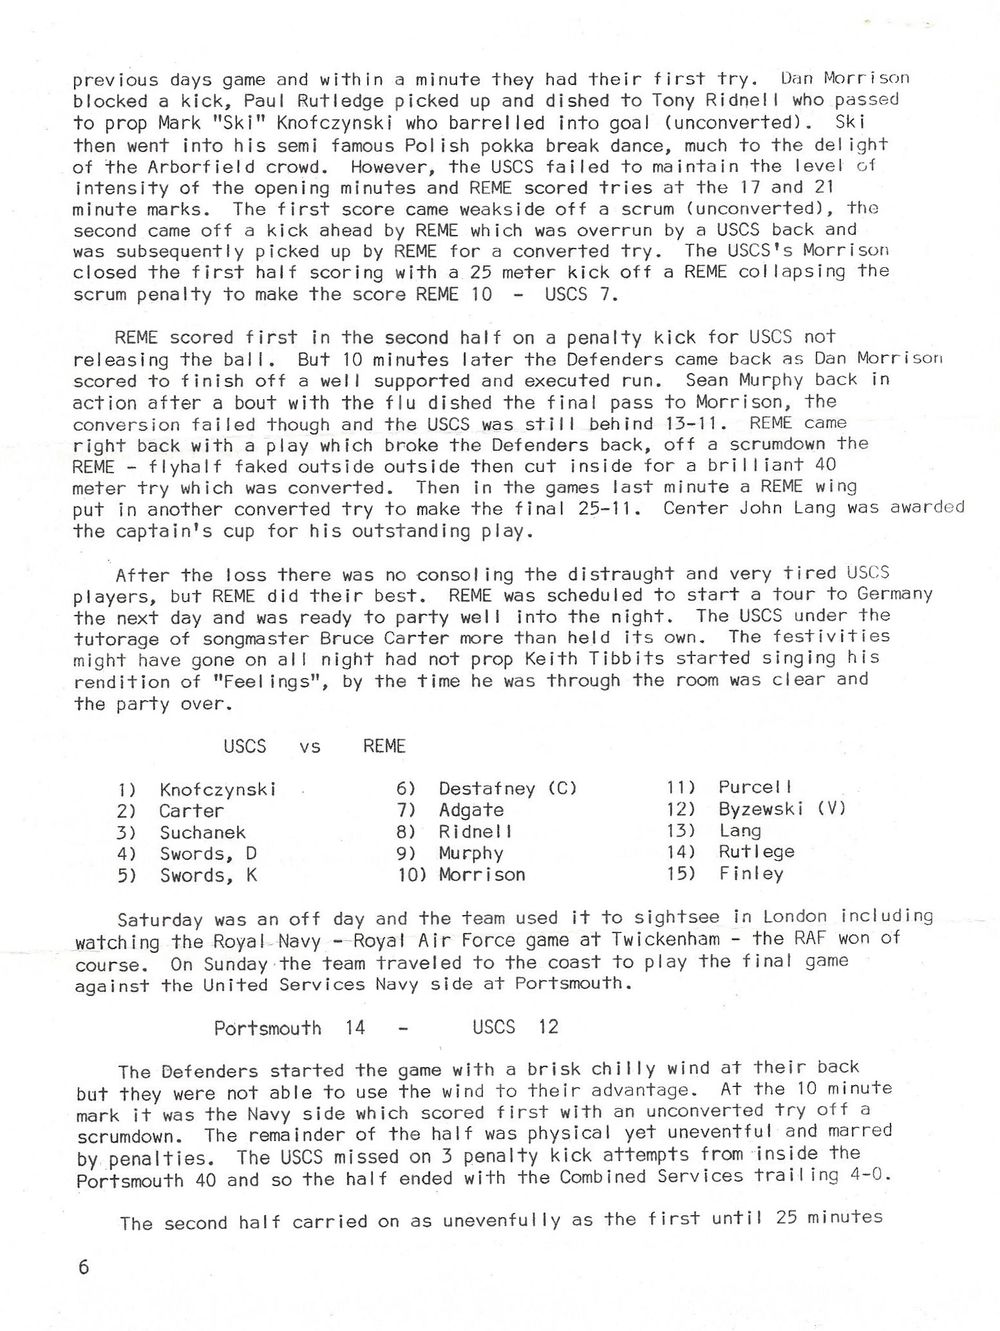 1986 CS Tour Report 6.jpg